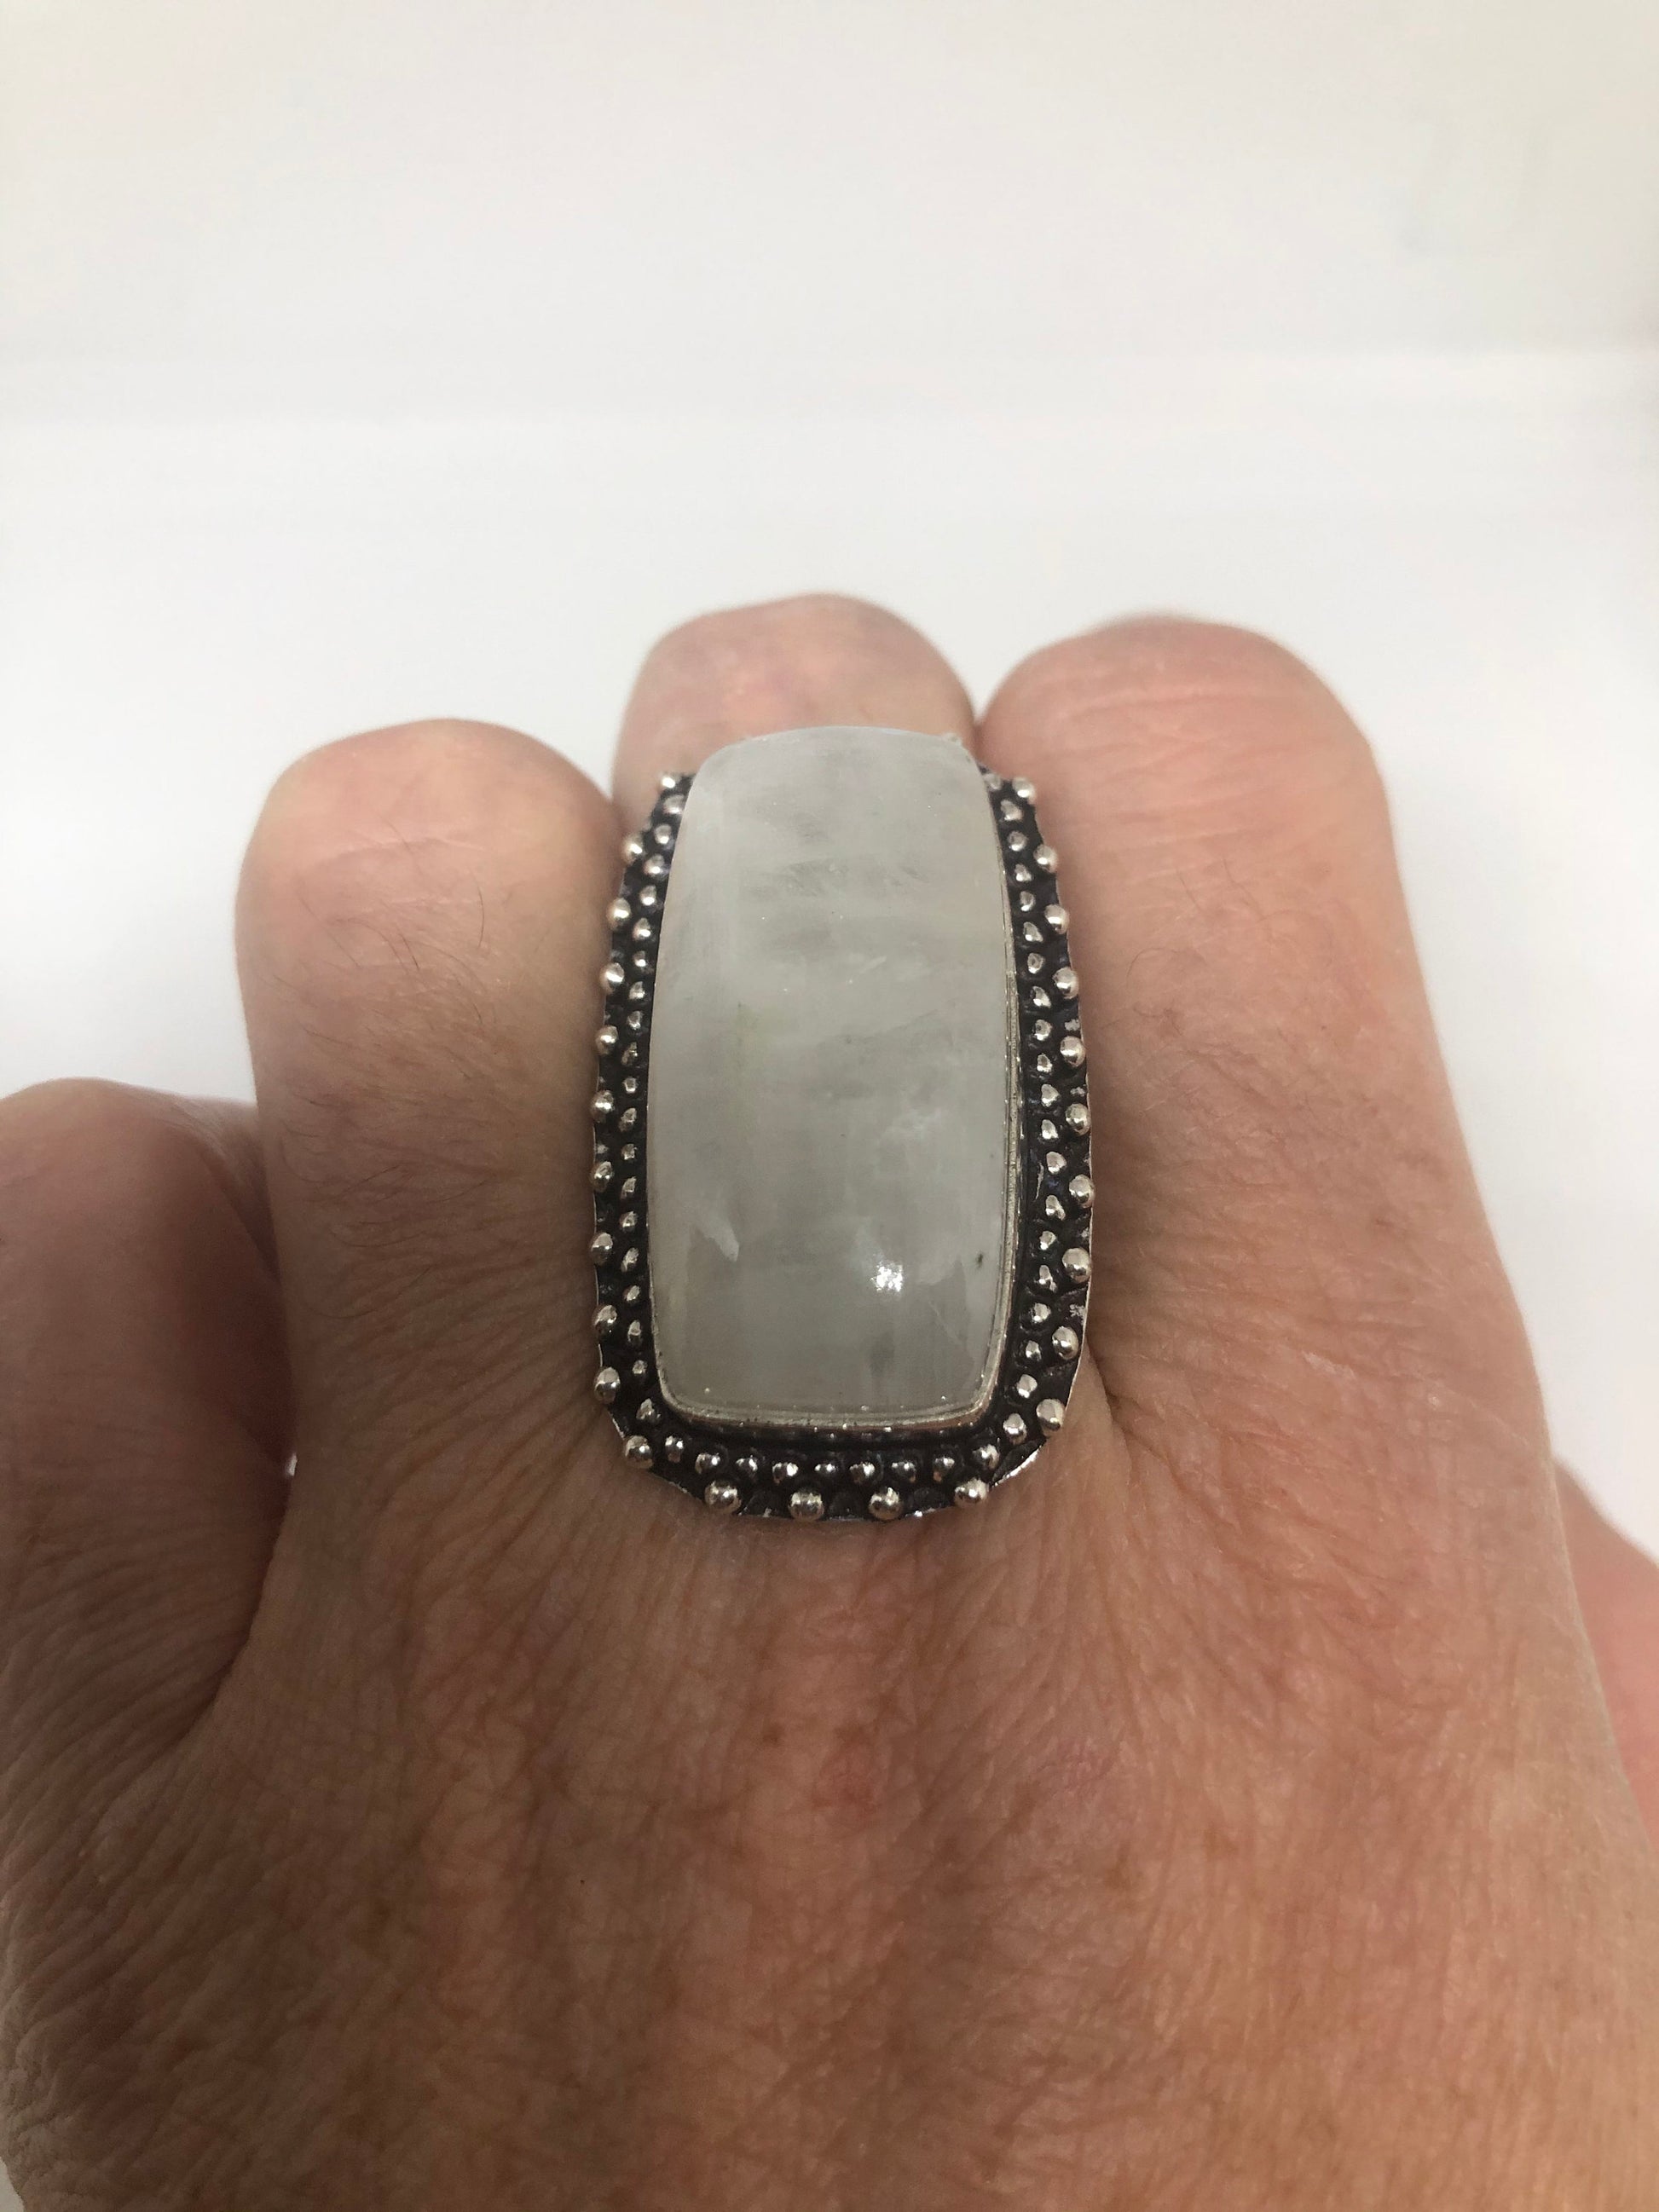 Vintage Genuine Blue White Rainbow Moonstone Ring Size 7.75